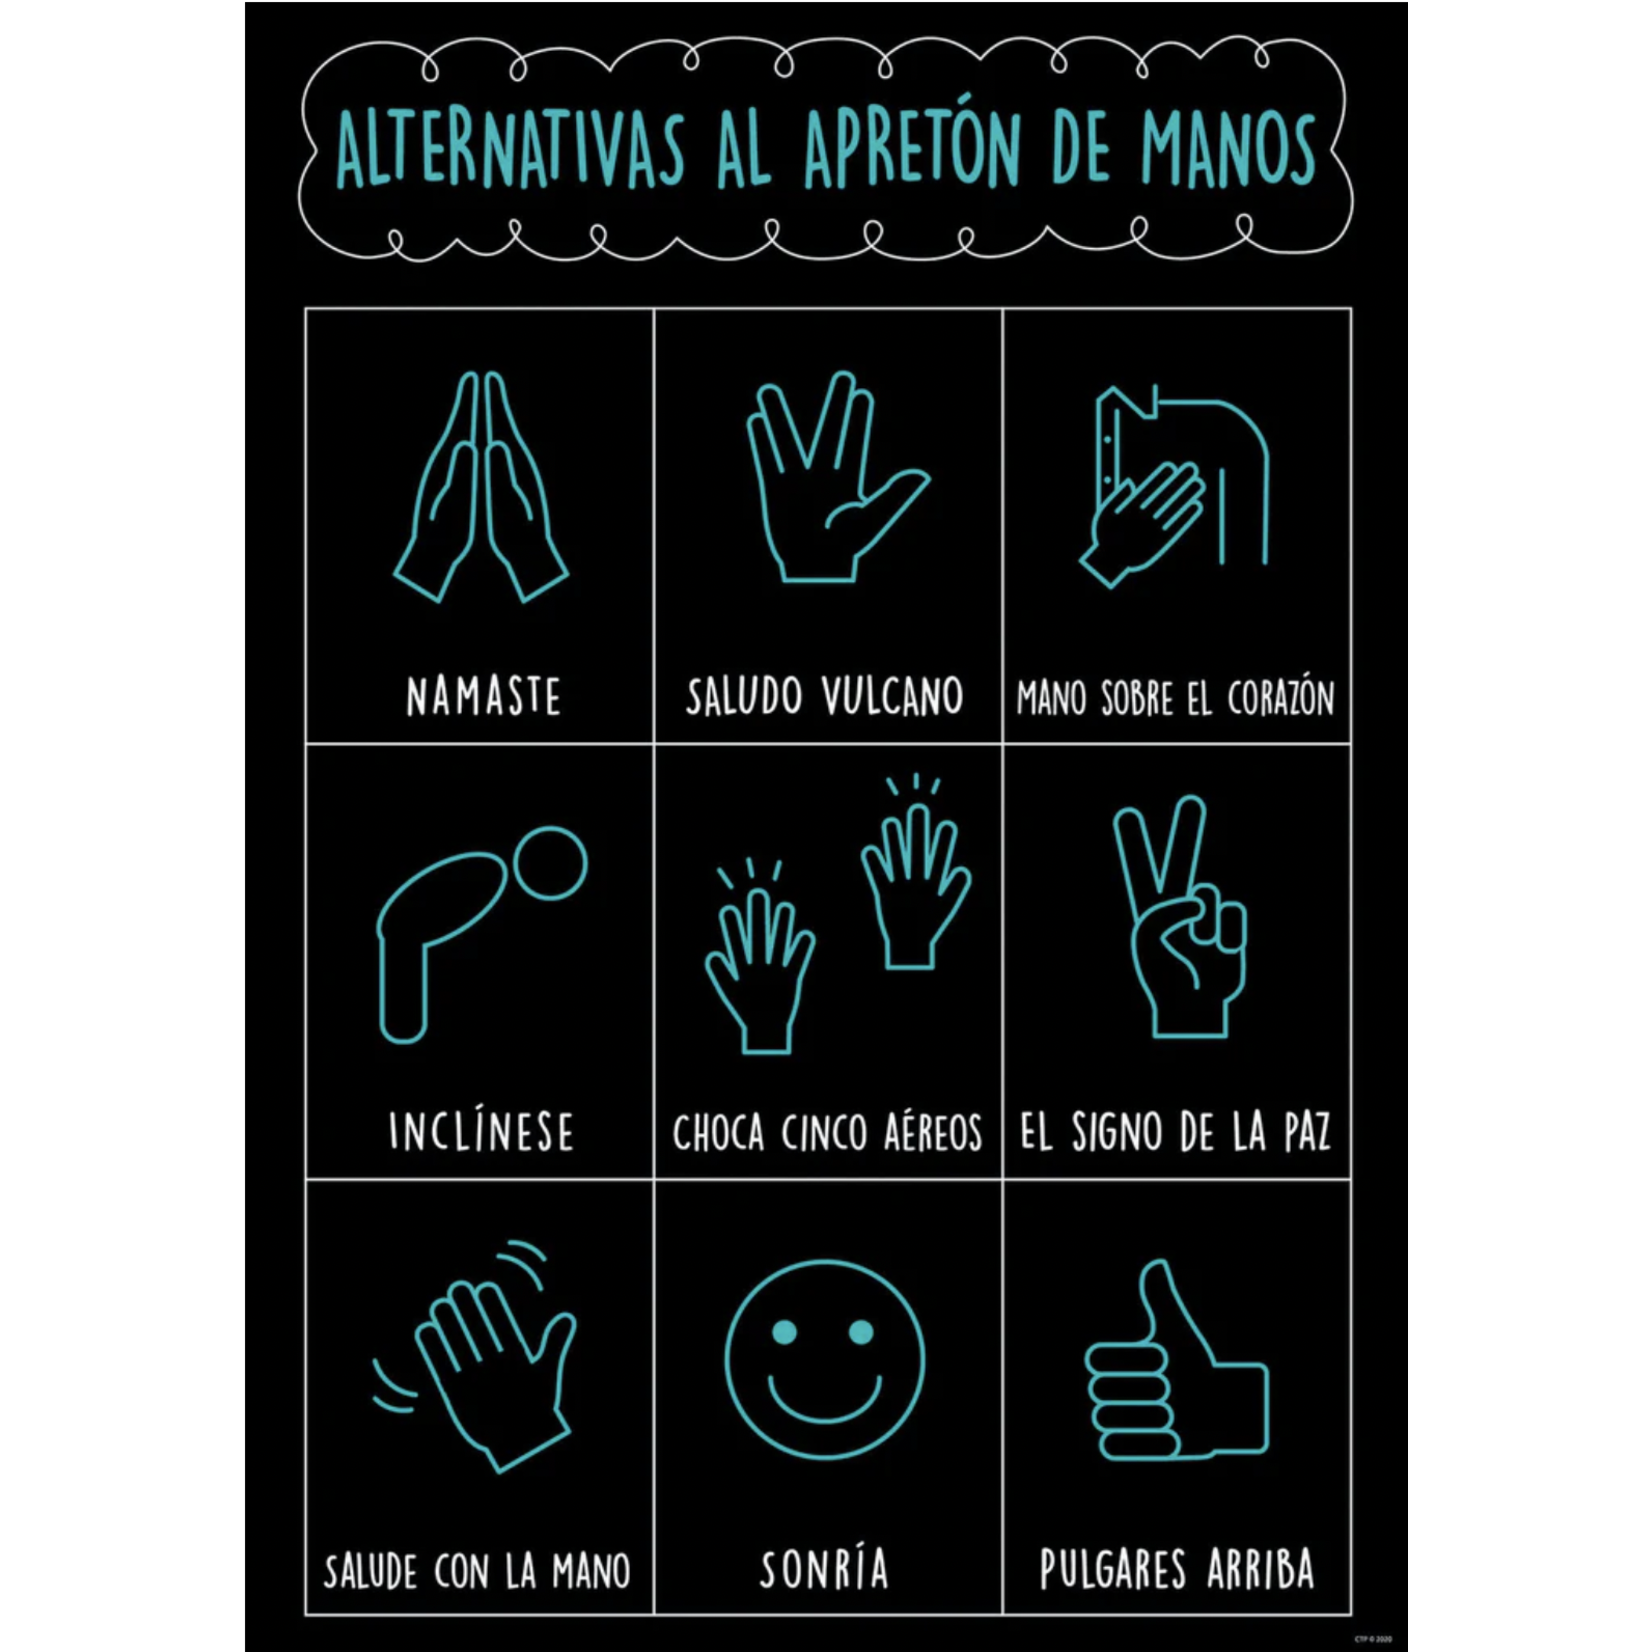 CREATIVE TEACHING PRESS Alternativas al apretón de manos (Alternatives to handshakes)